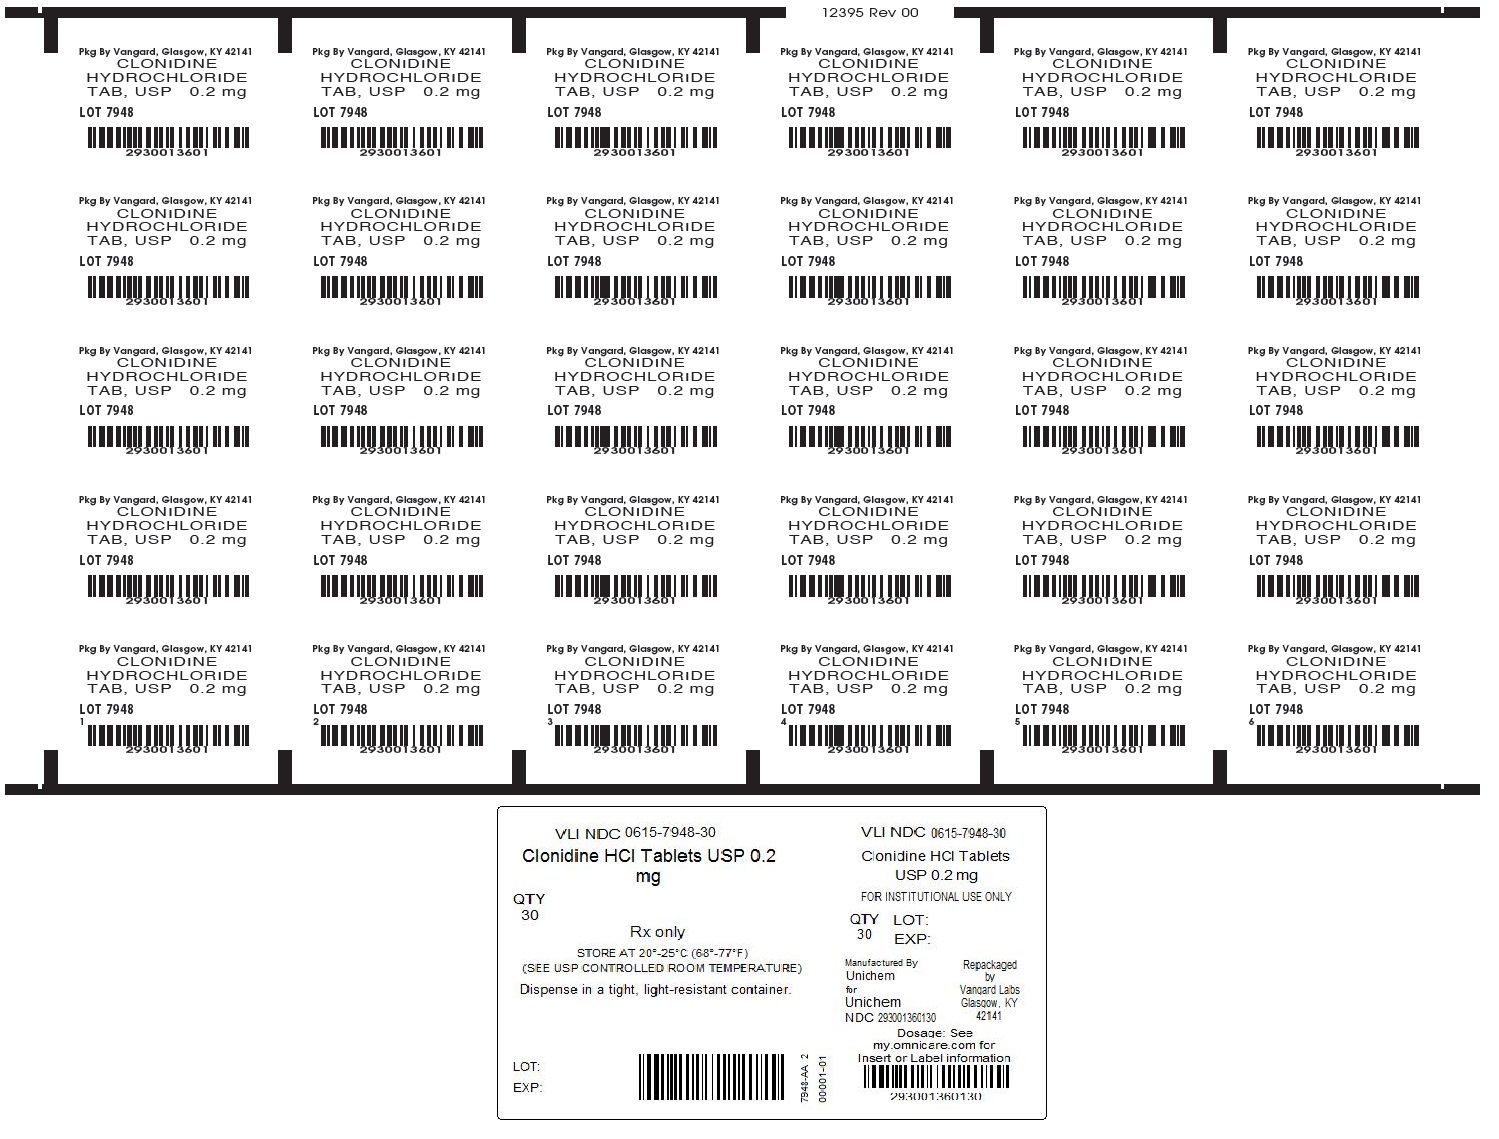 Clonidine HCl Tablet 0.2mg unit dose box label